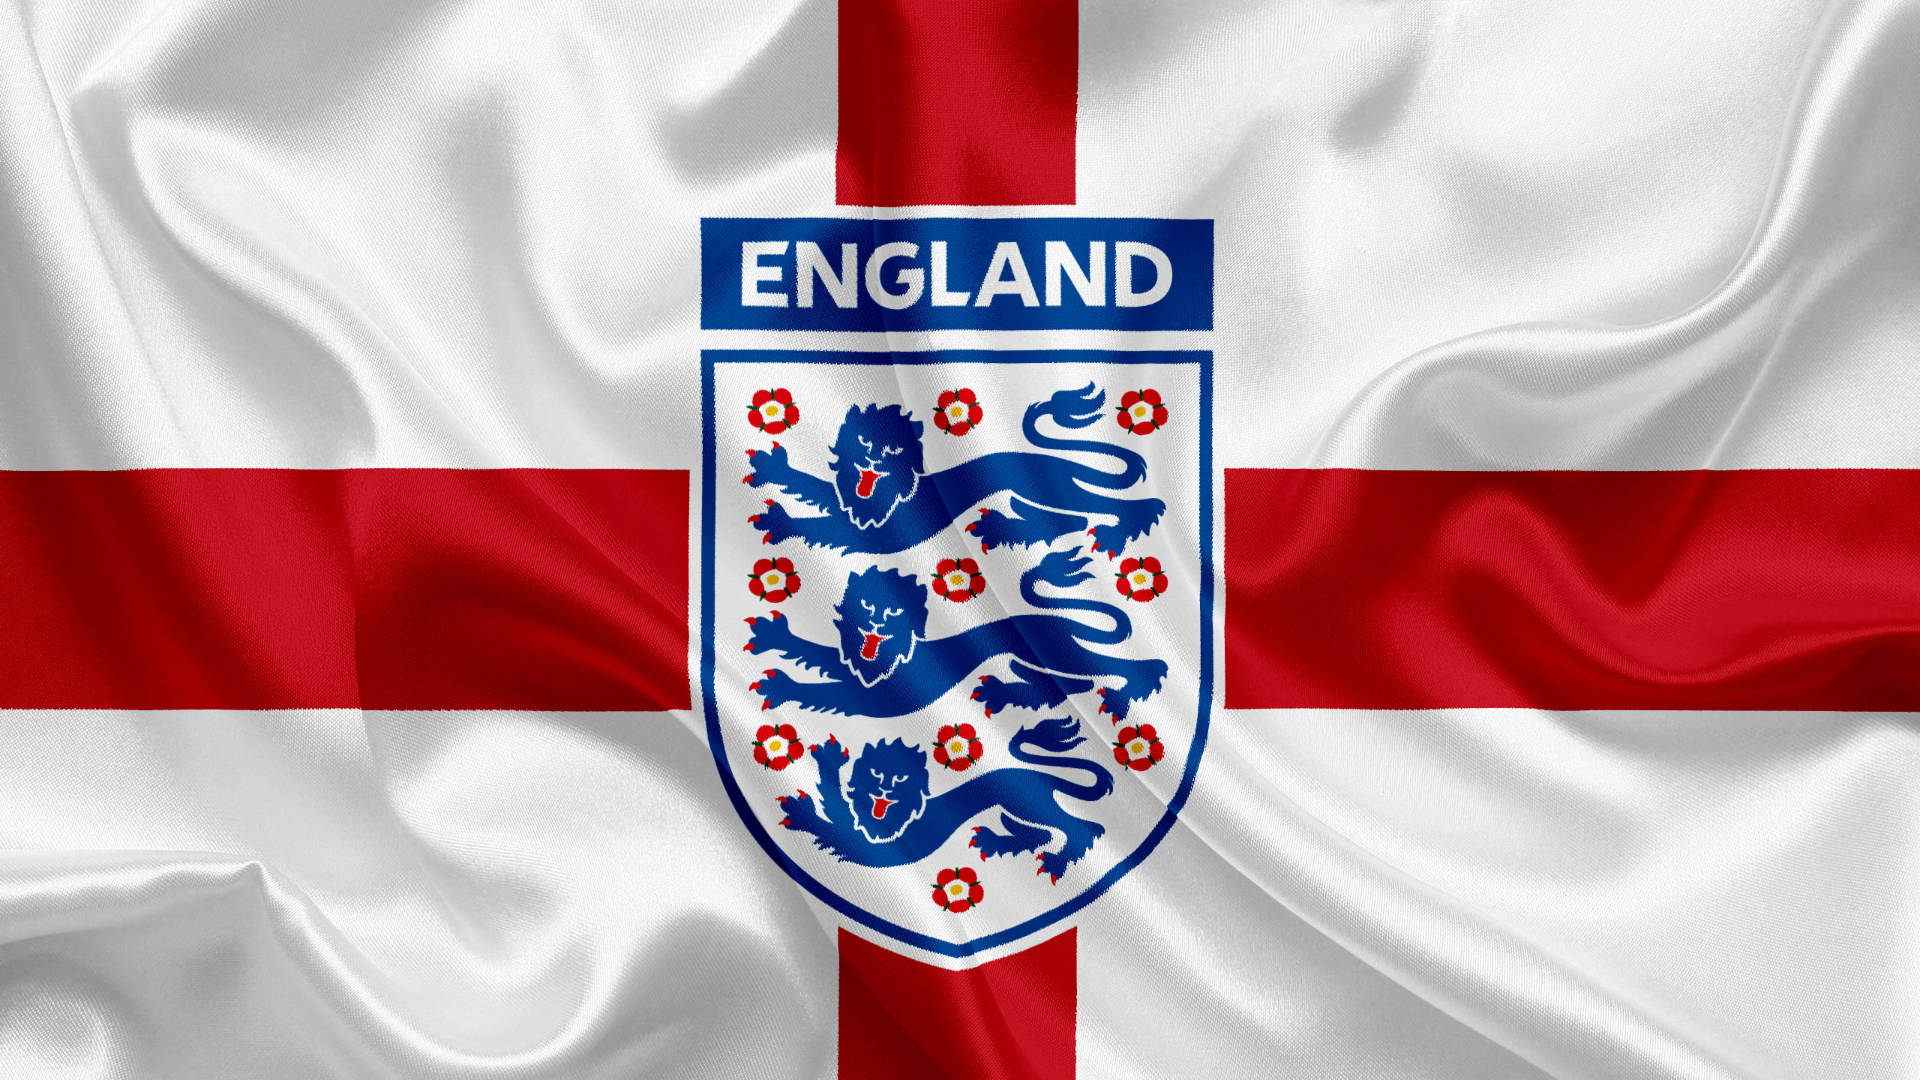 England Football Crest English Flag Background